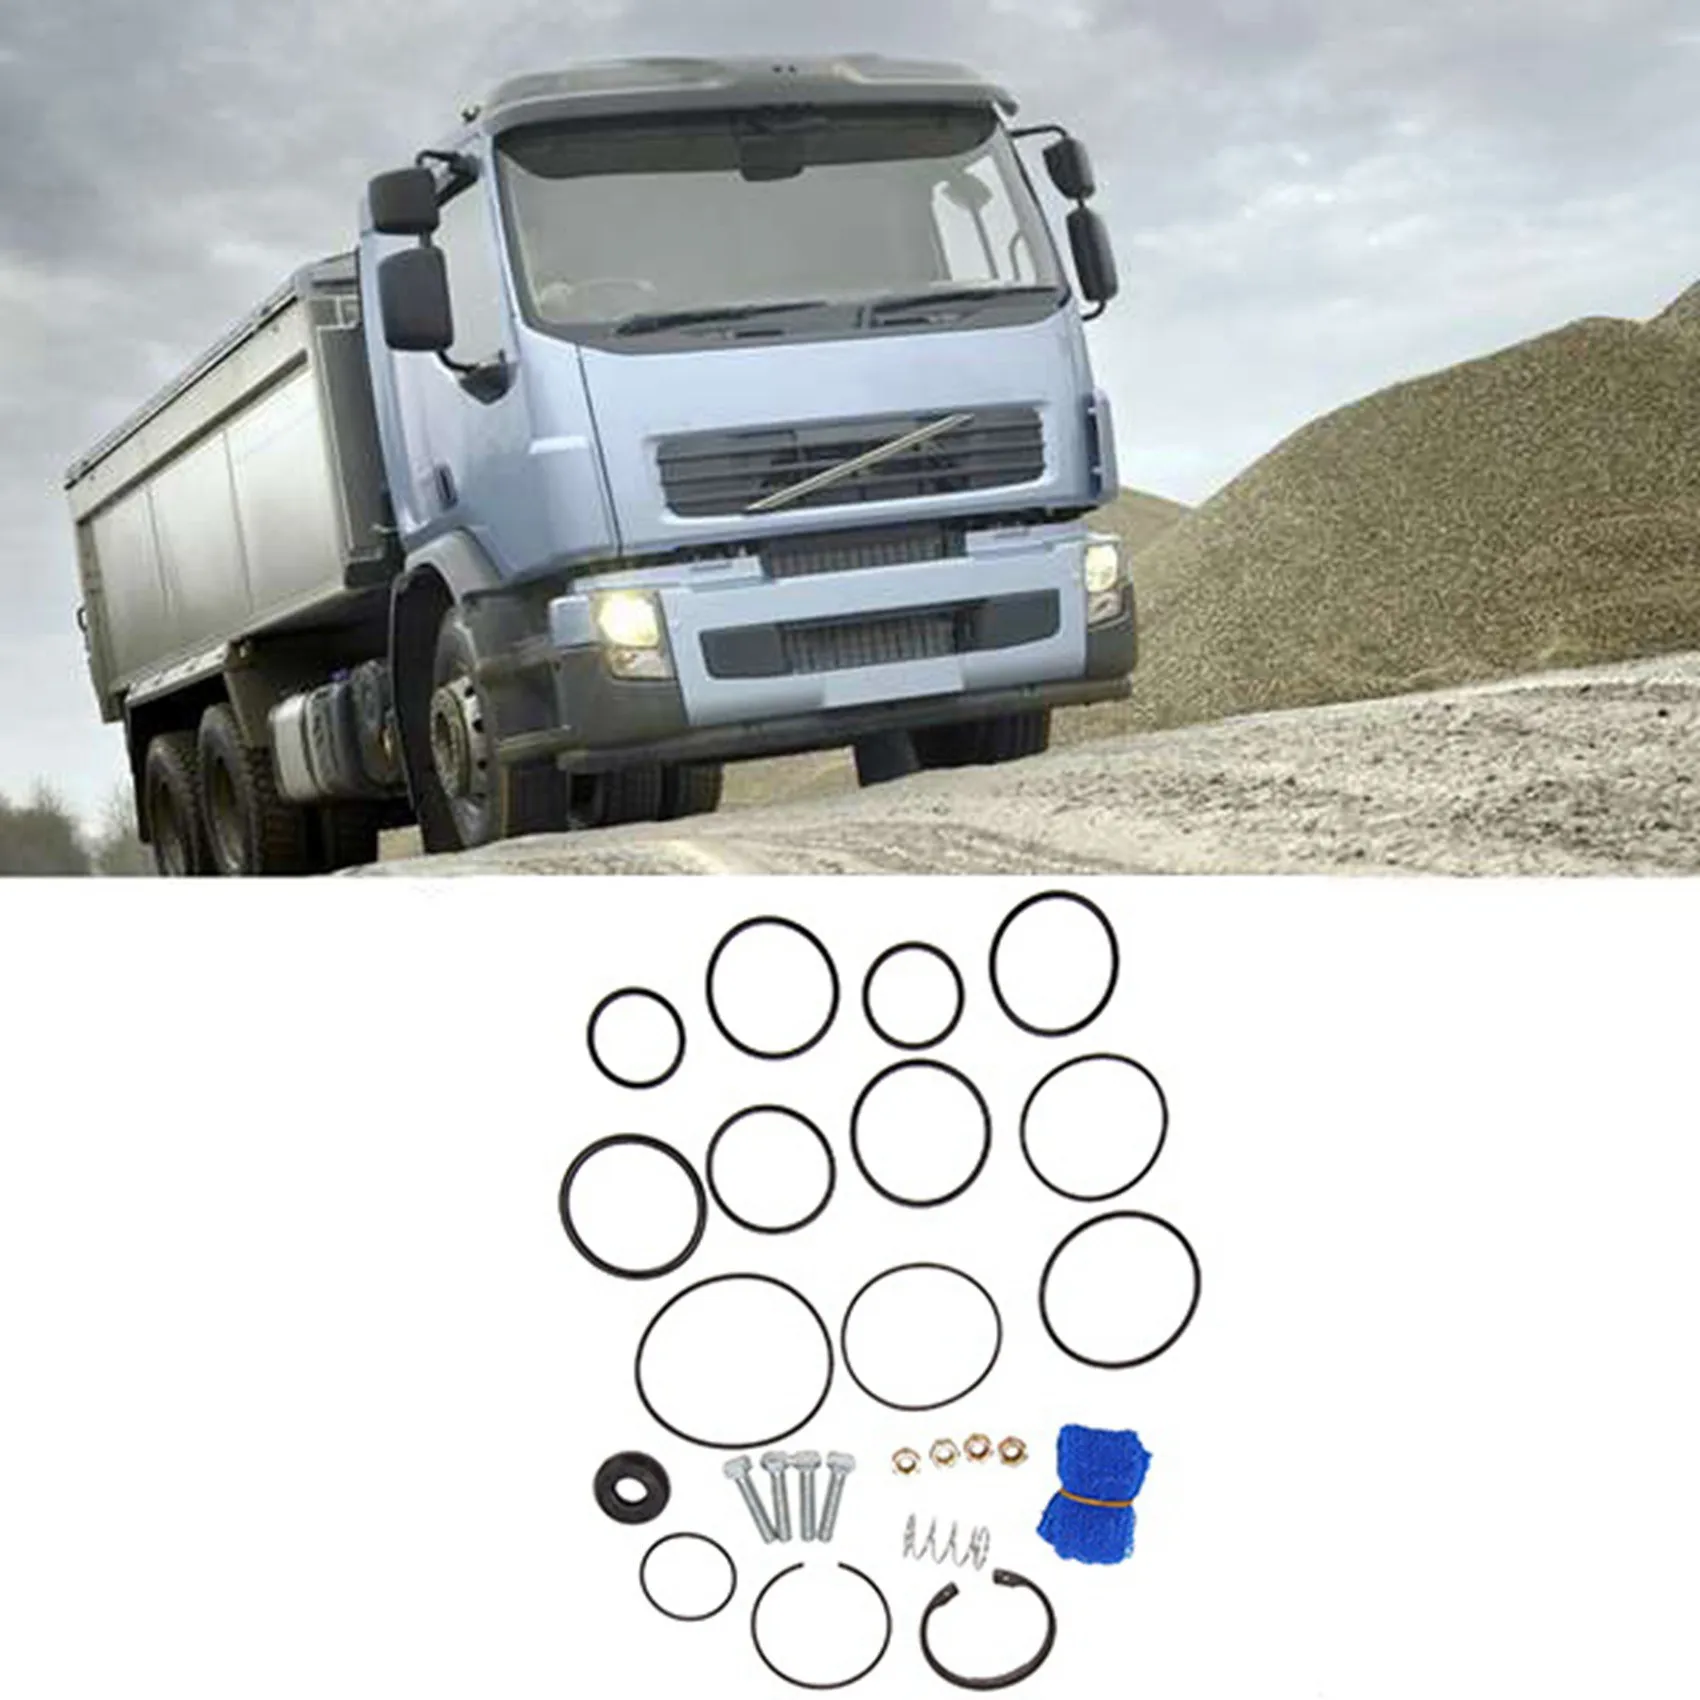 

Truck Control Valve Repair Kits for Trucks DAF Vol-Vo MAN Ren-Ault Sca-Nia K020625 K000089 K020623 K000917 K016060